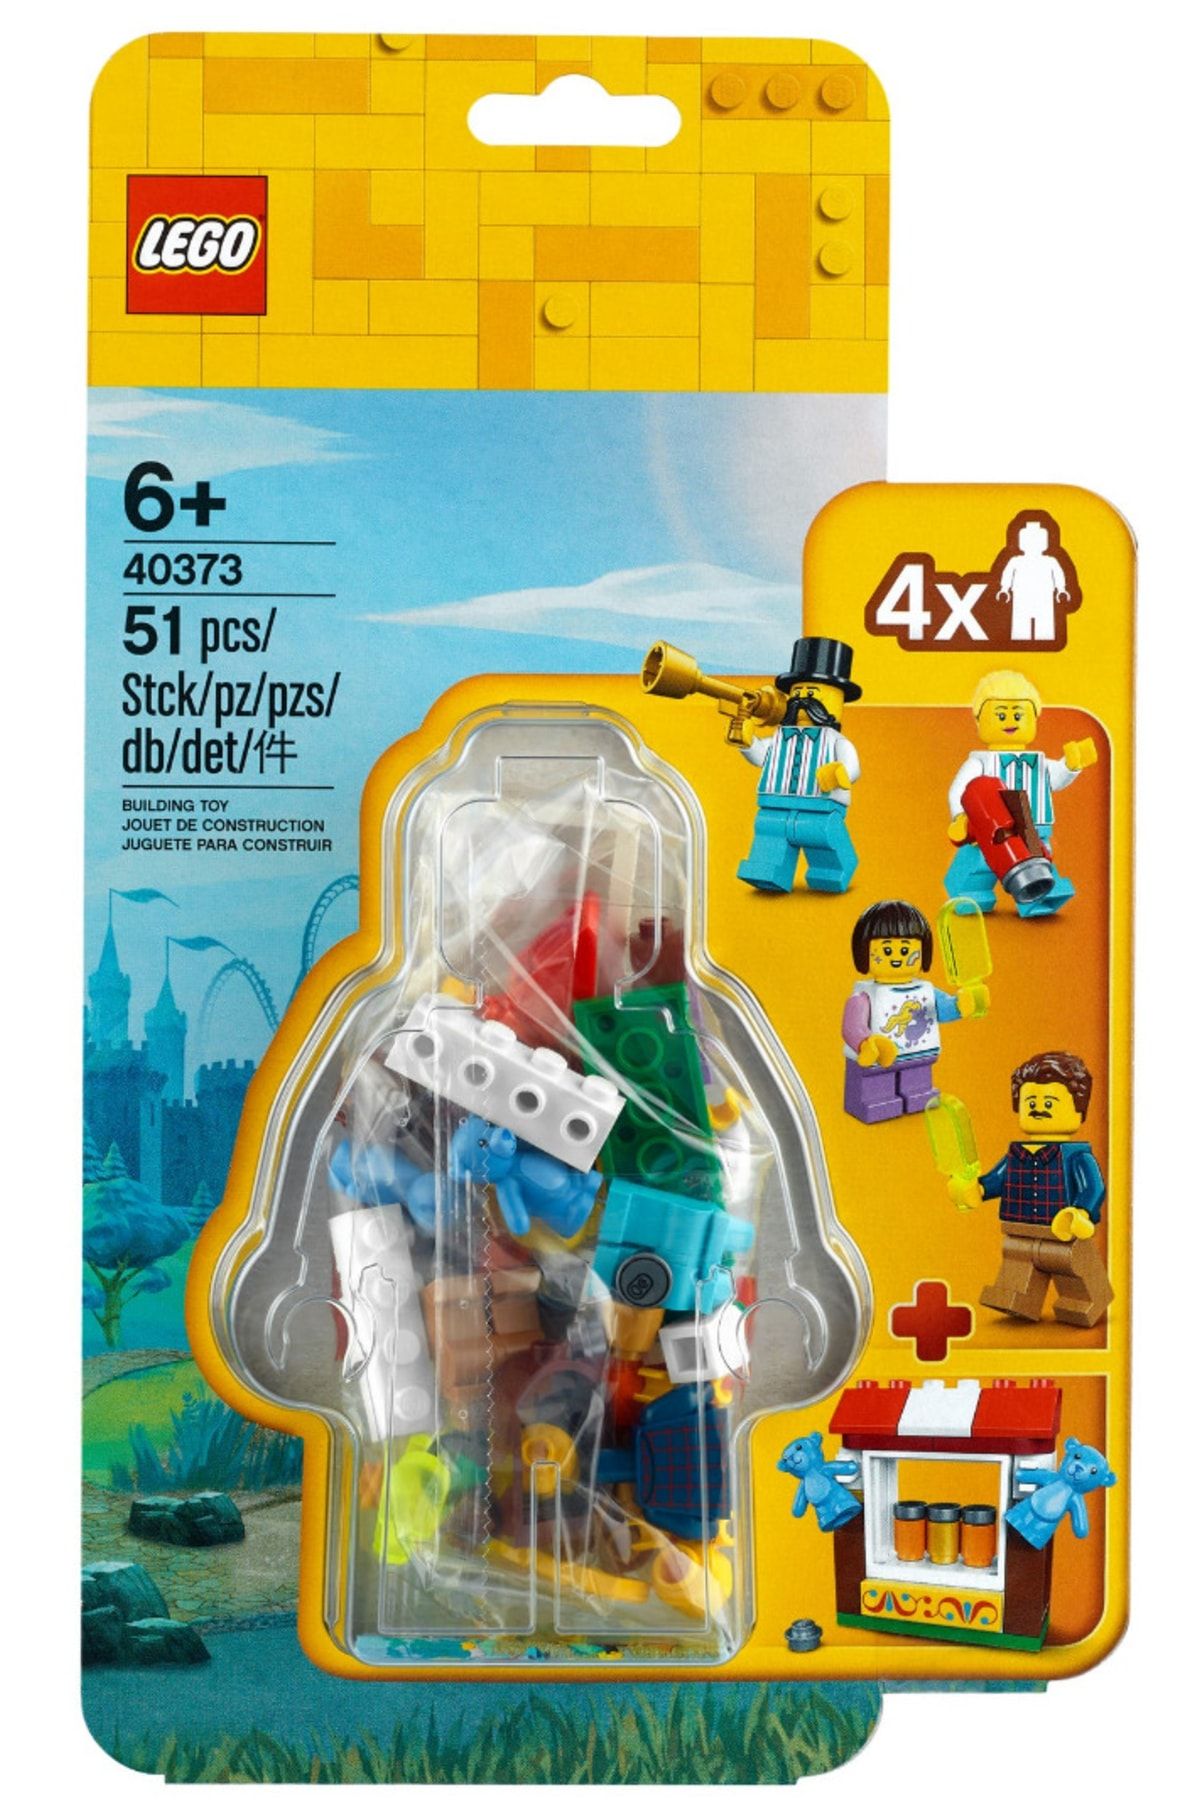 LEGO ® Fairground Minifigure Accessory Set 40373